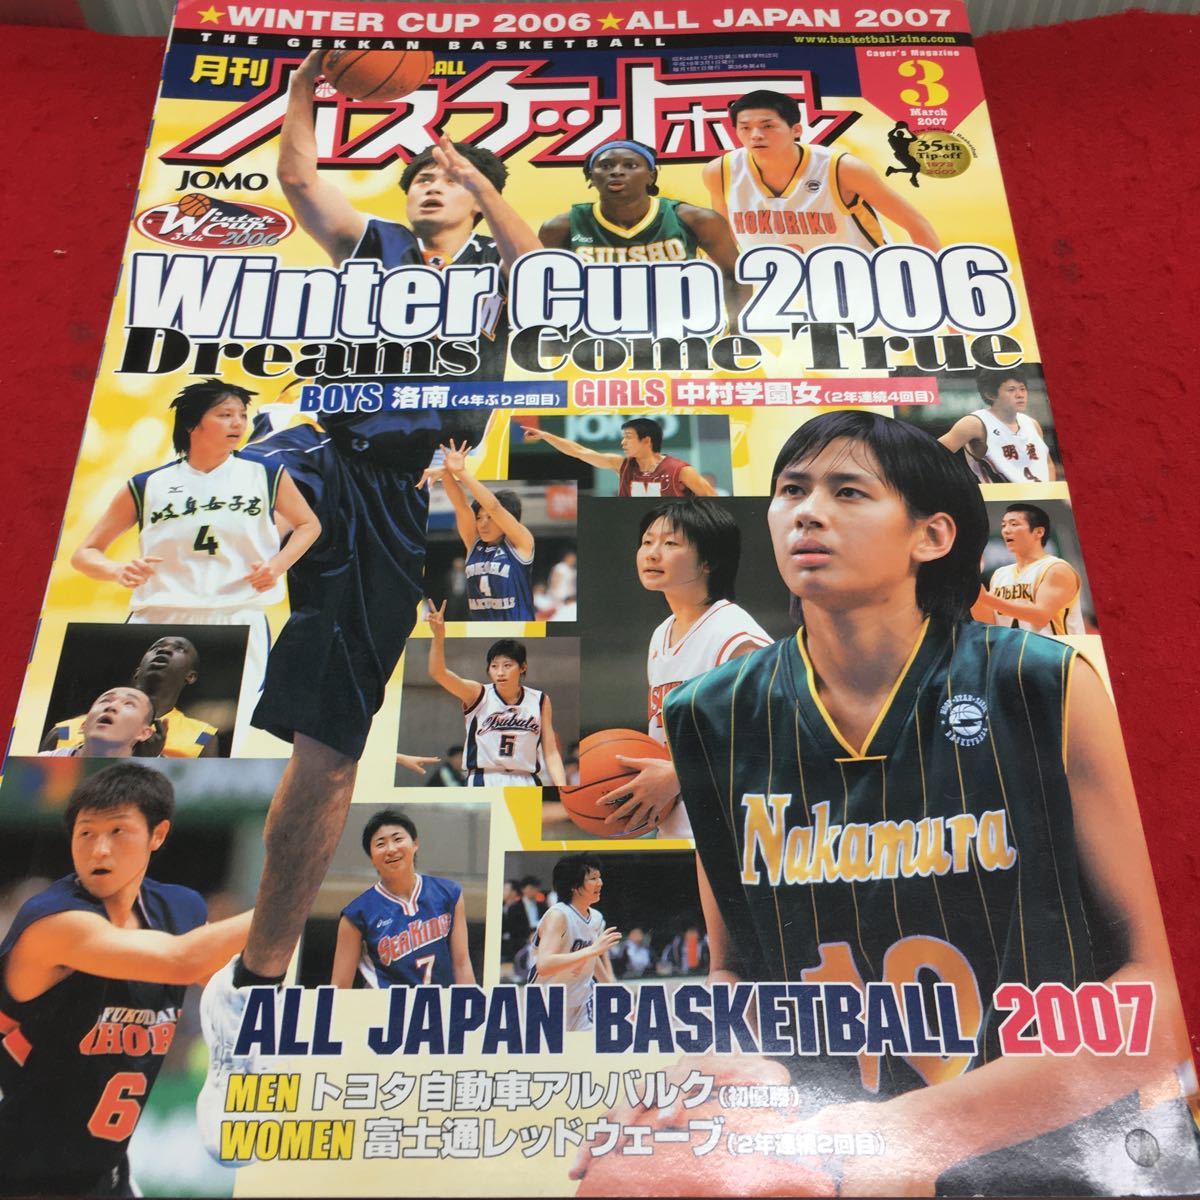 h-316 ежемесячный баскетбол 2007/3 *WINTER CUP 2006*ALL JAPAN 2007 эпоха Heisei 19 год 3 месяц 1 день выпуск *14